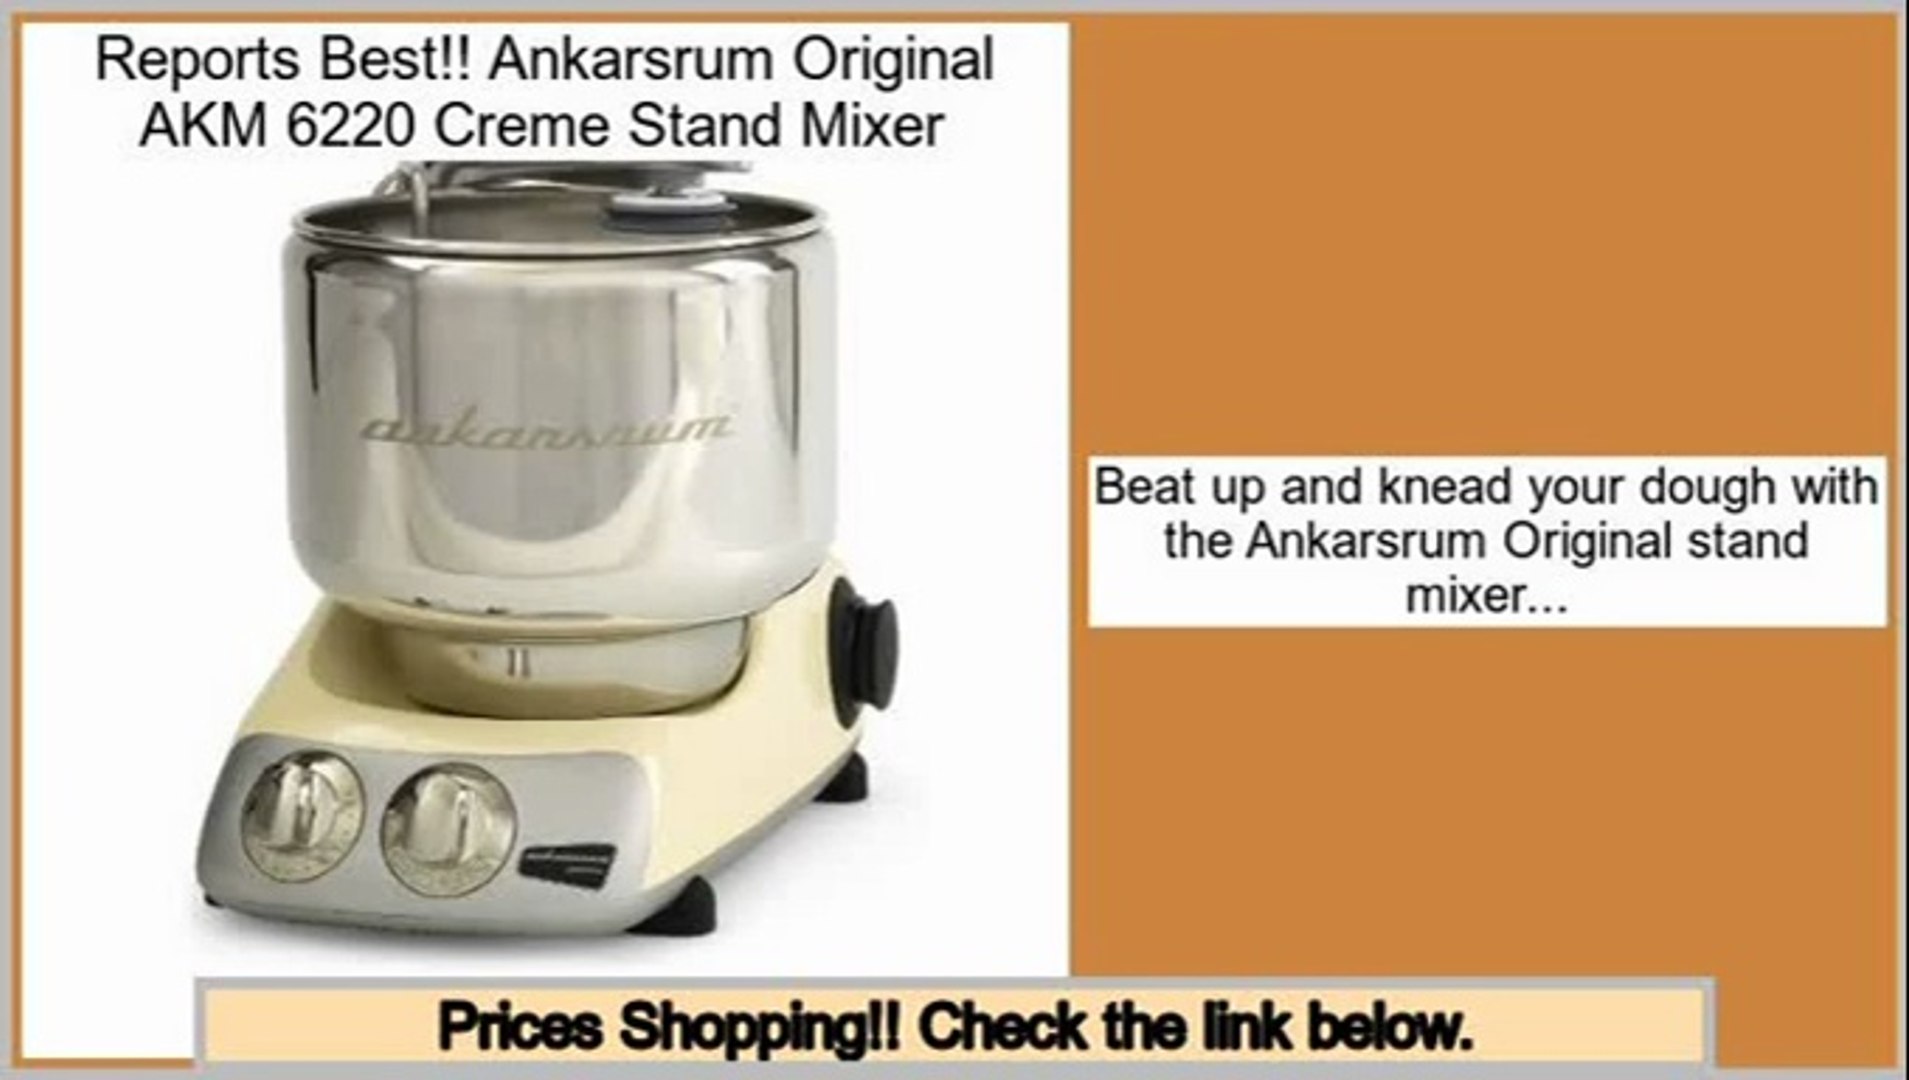 Ankarsrum Original Stand Mixer, Creme